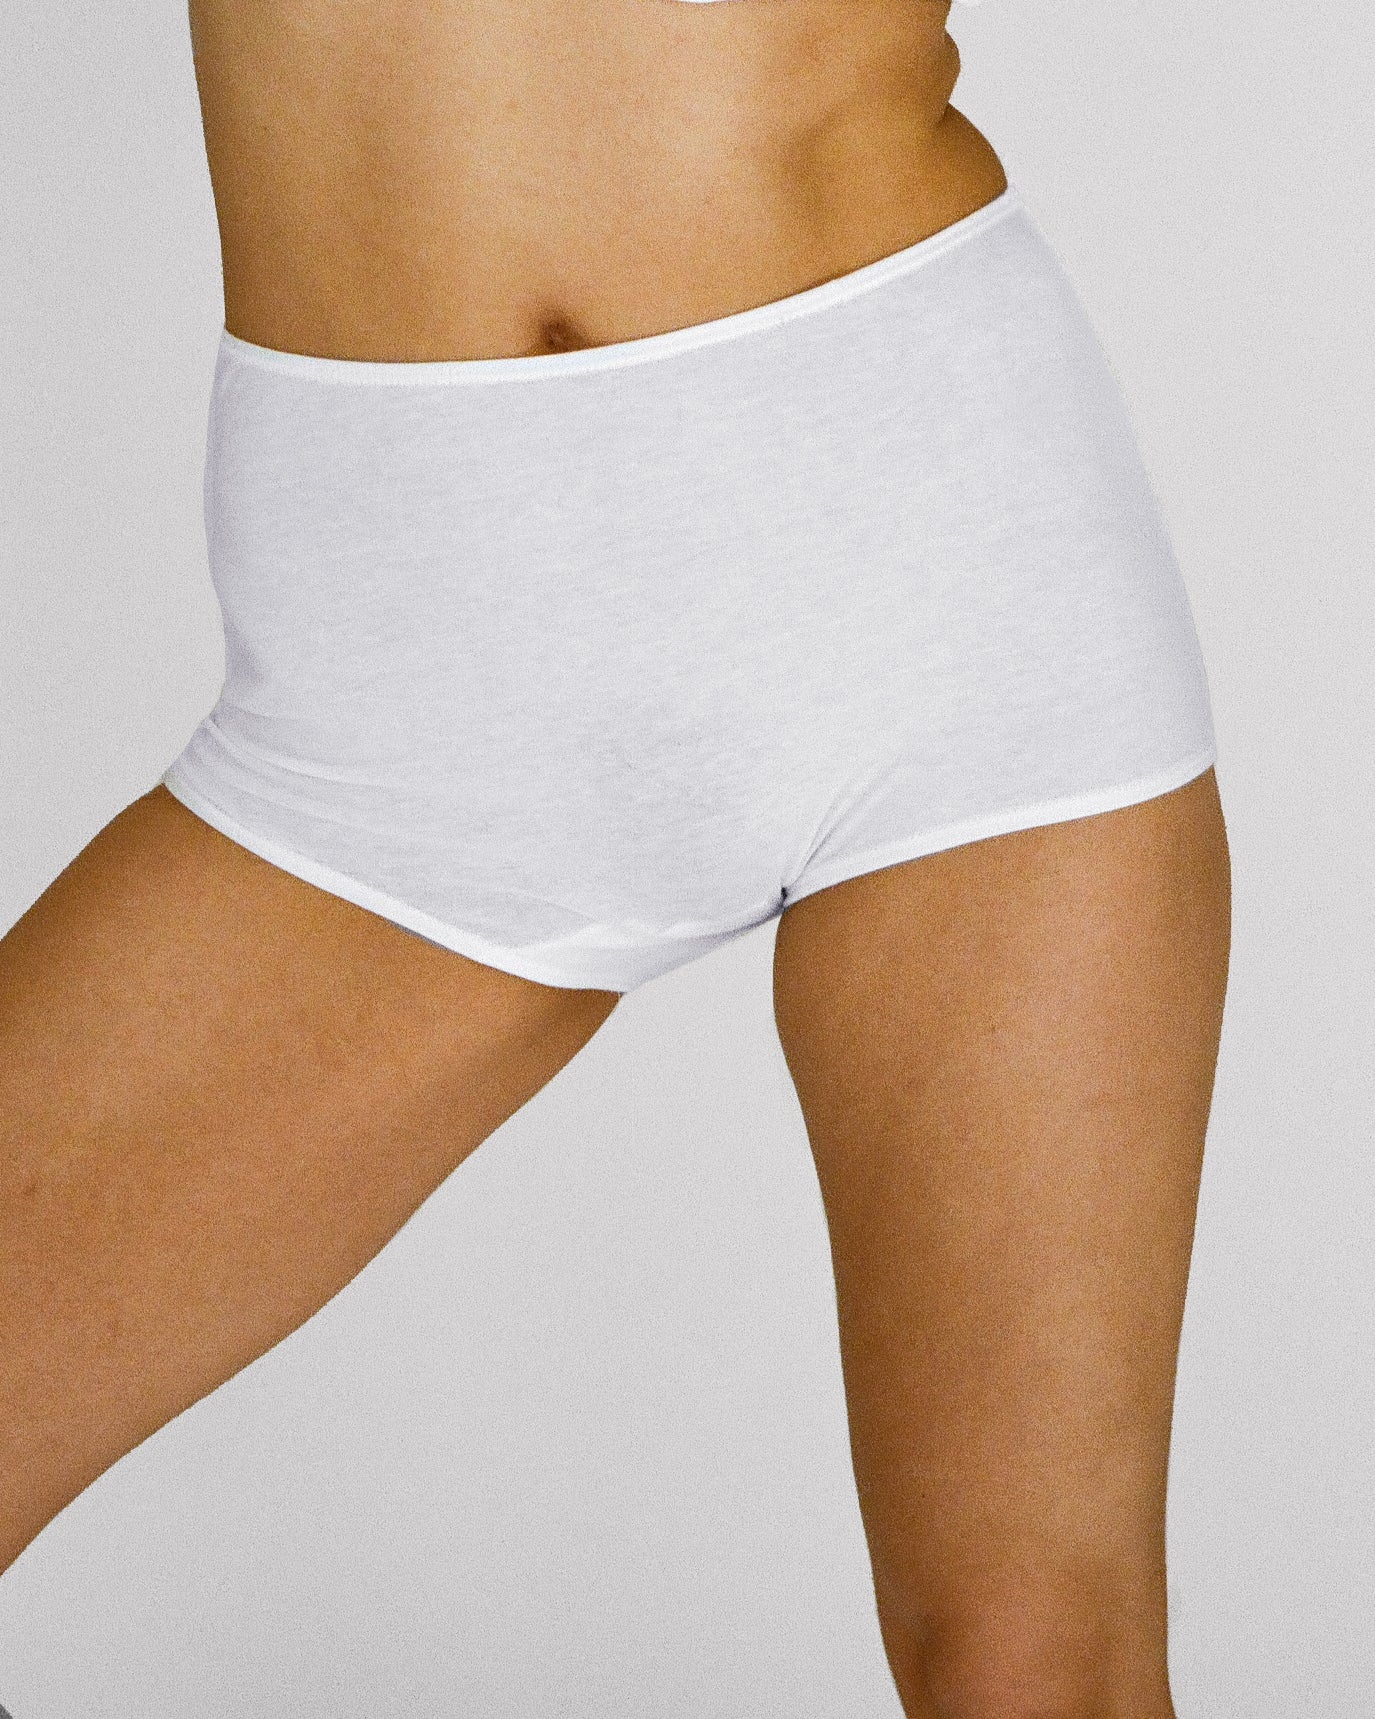 Women Cotton High Waist Panties Lingerie Underpants Briefs